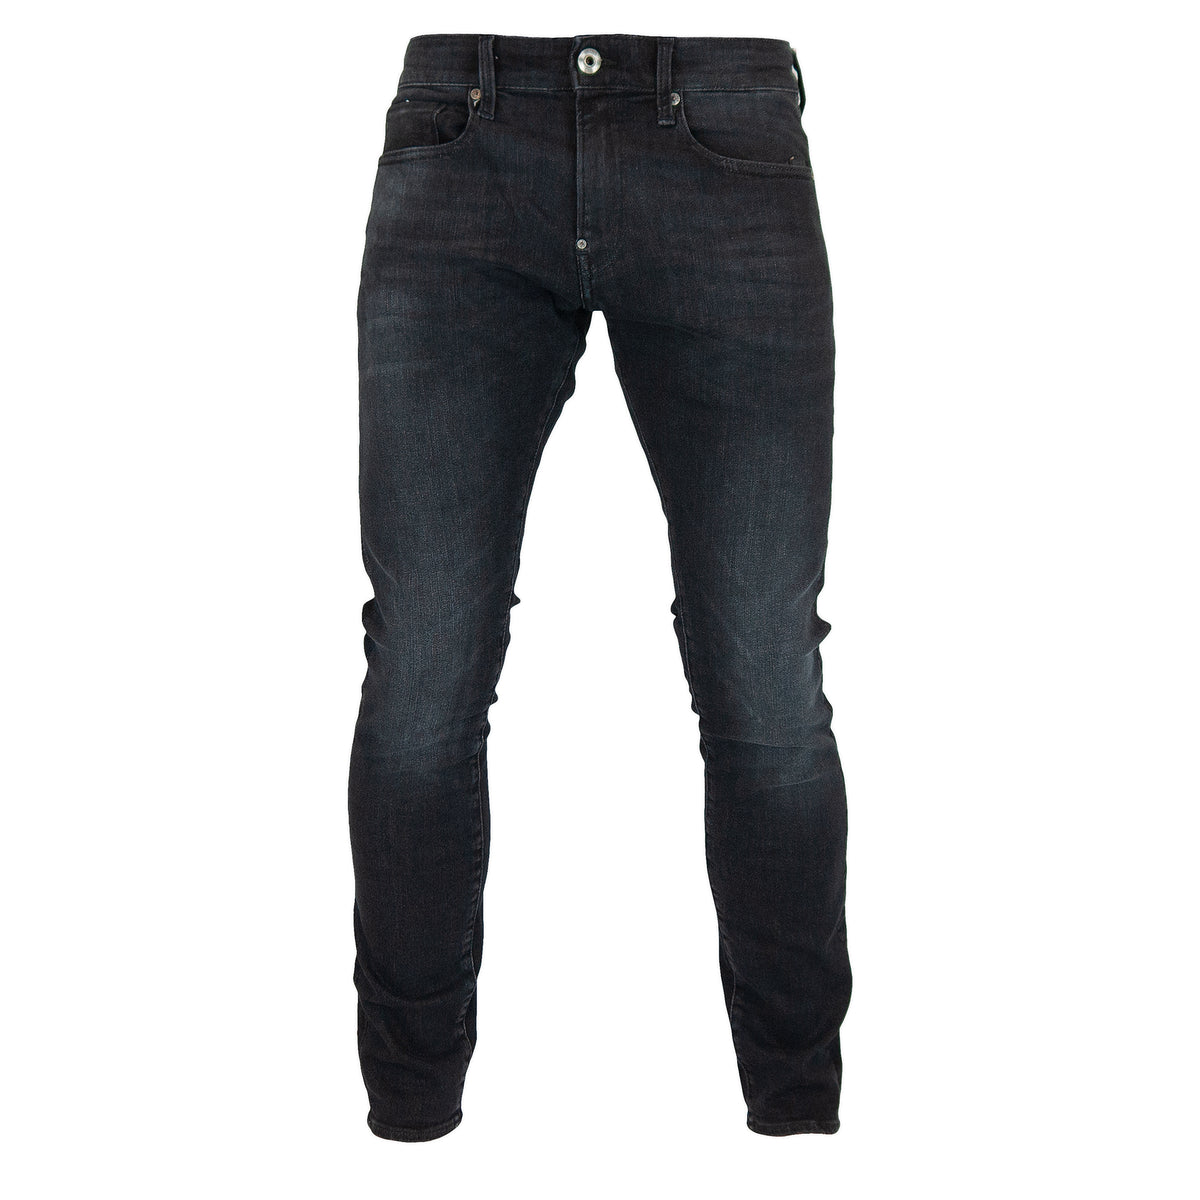 Revend Medium - G-Star Faded Skinny Jeans Black Elto Aged Superstretch